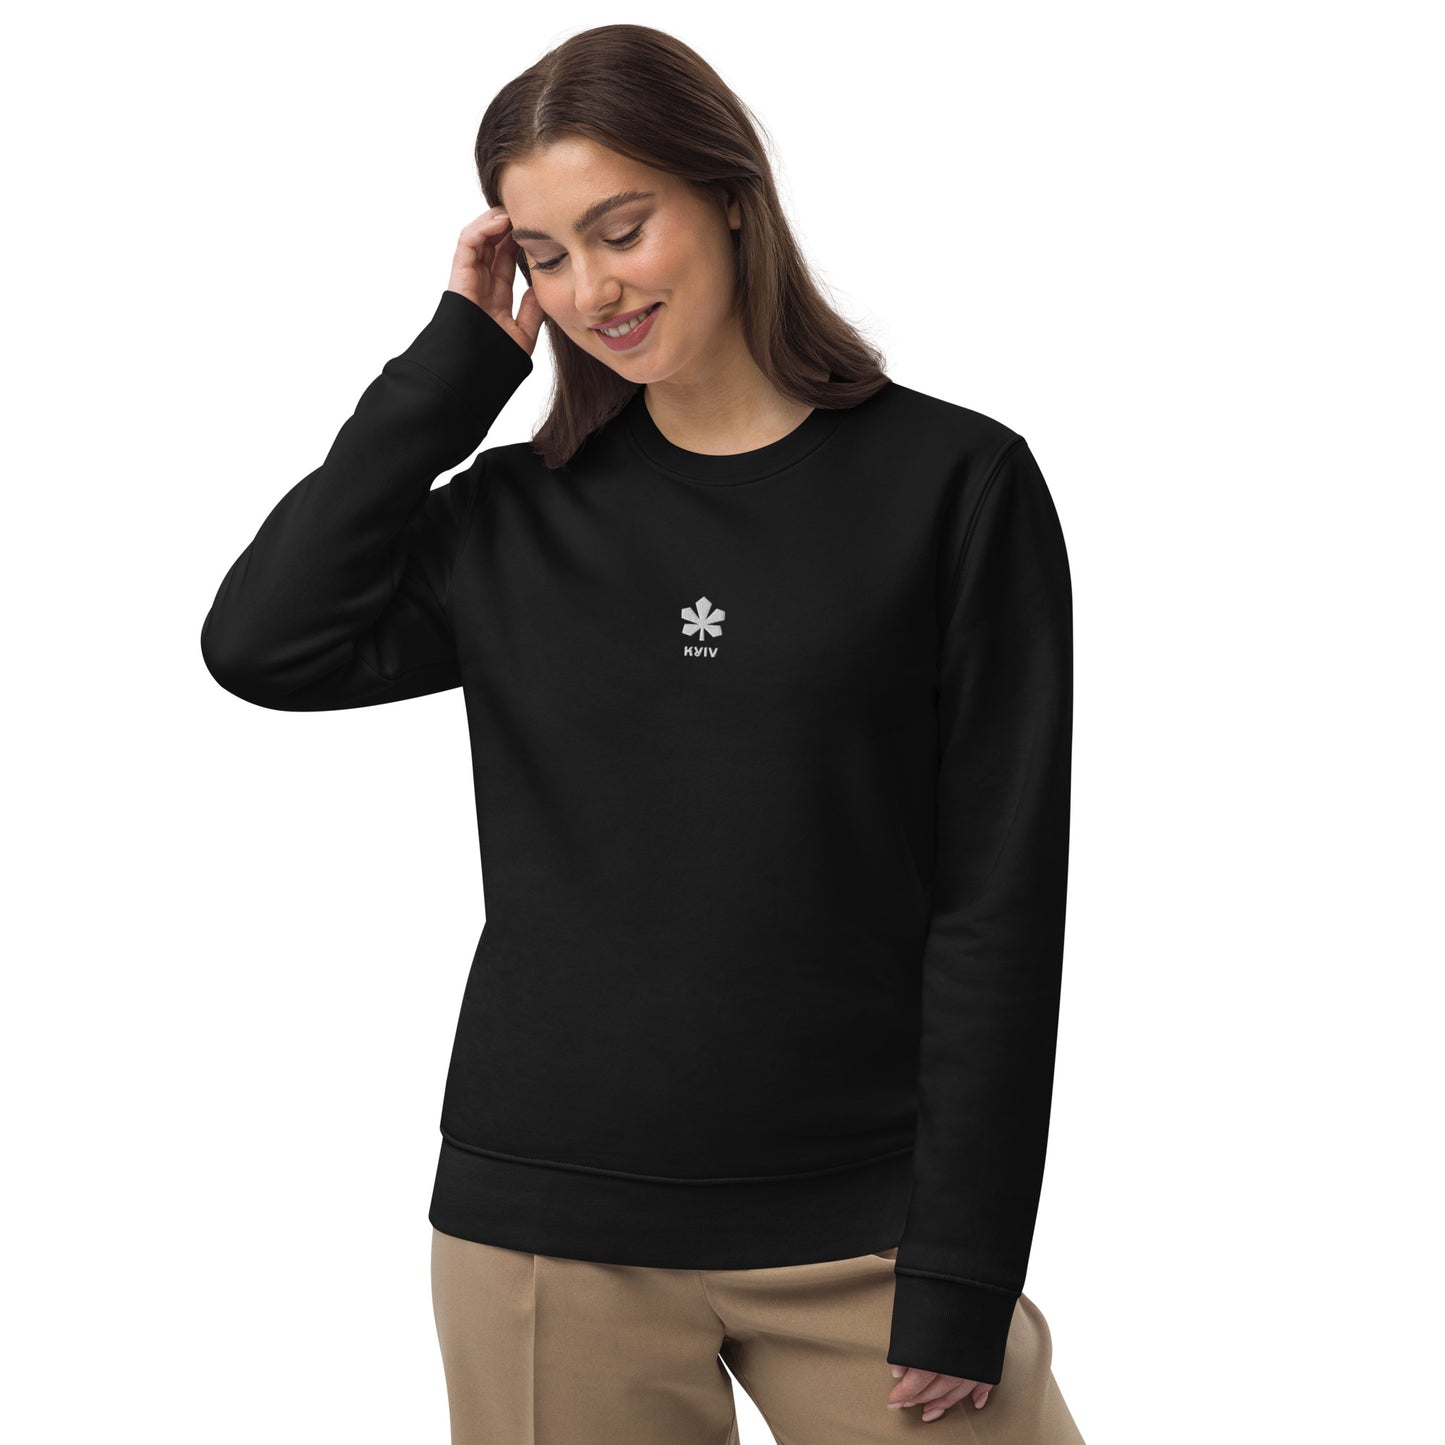 Kashtan unisex eco sweatshirt with embroidery in black